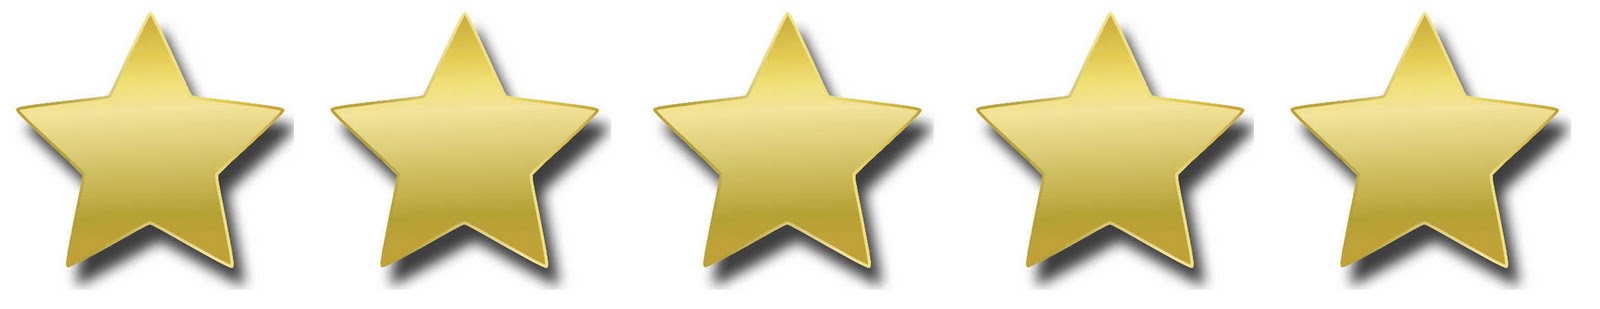 Gold 5 star rating - Printable Version